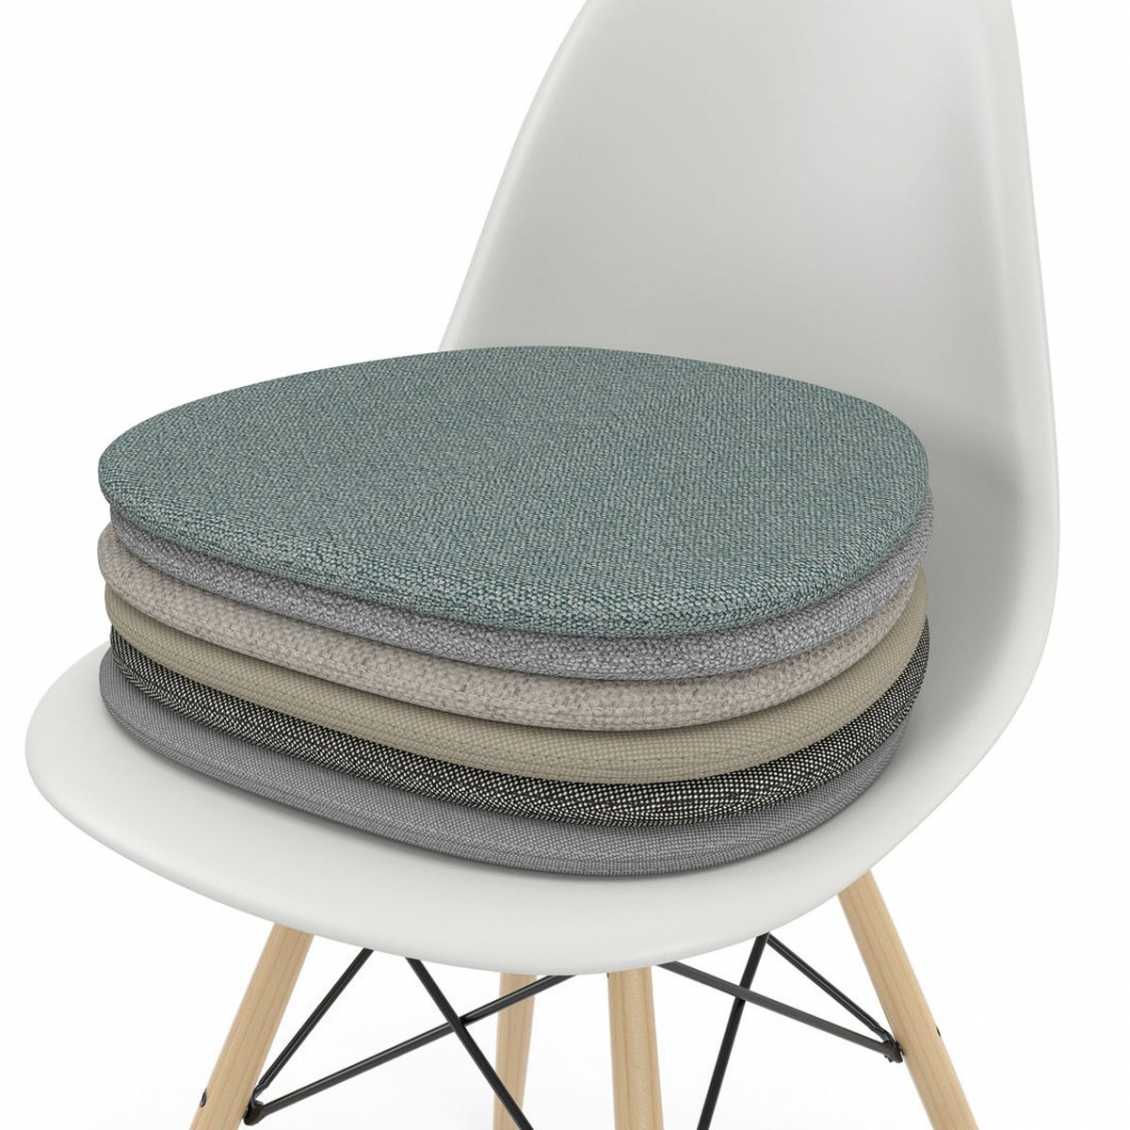 https://www.fundesign.nl/media/catalog/product/6/1/6140560_soft-seats-type-b-beauties-eames-plastic-side-chair_v_fullbleed_1440x_3.jpg